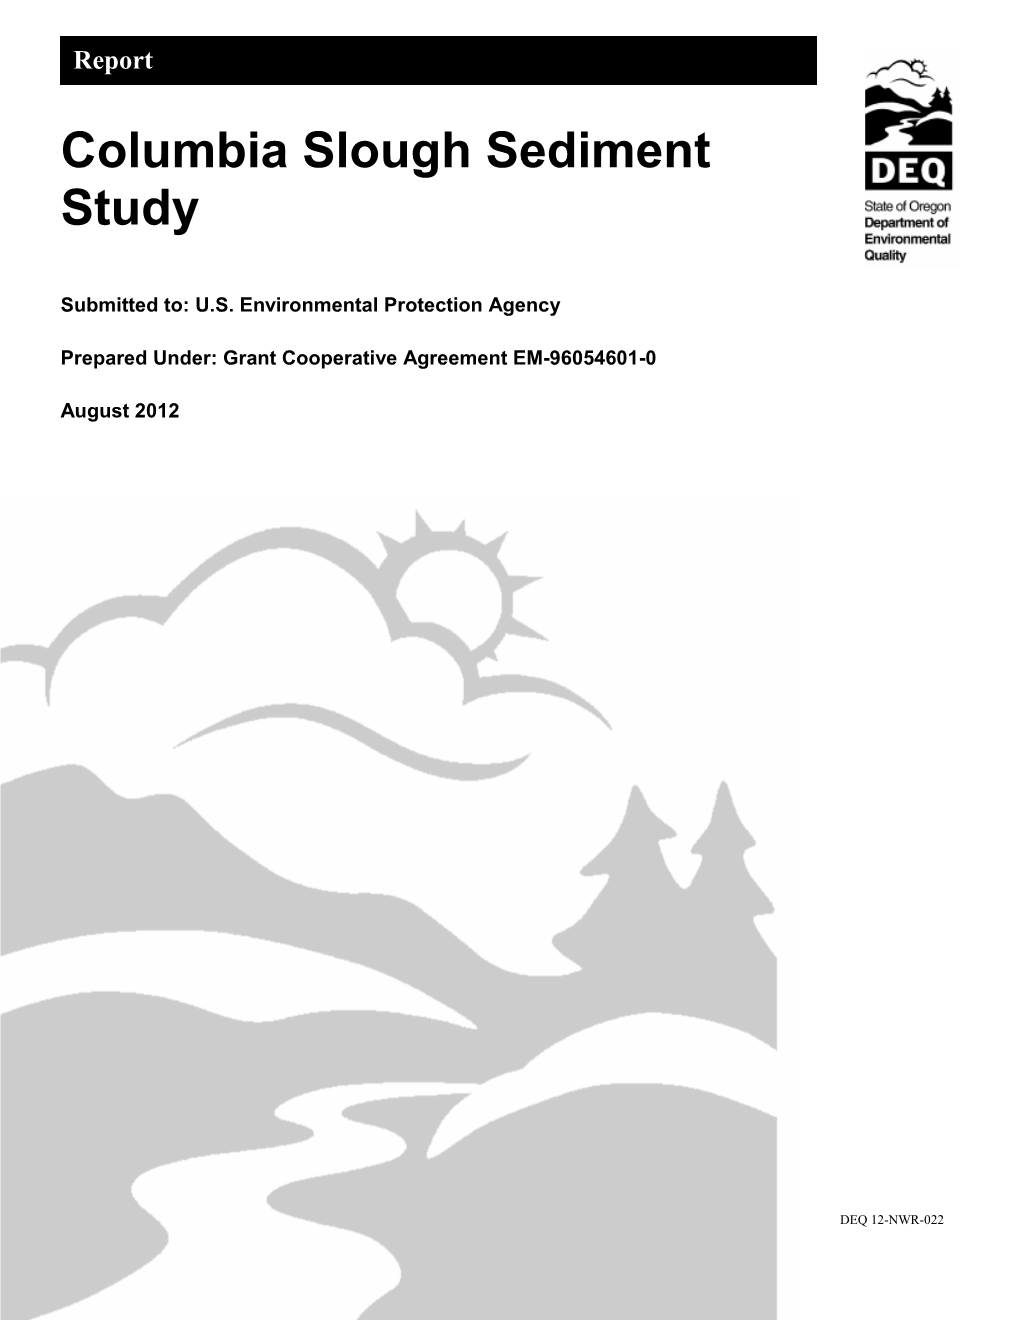 Columbia Slough Sediment Study August 2012